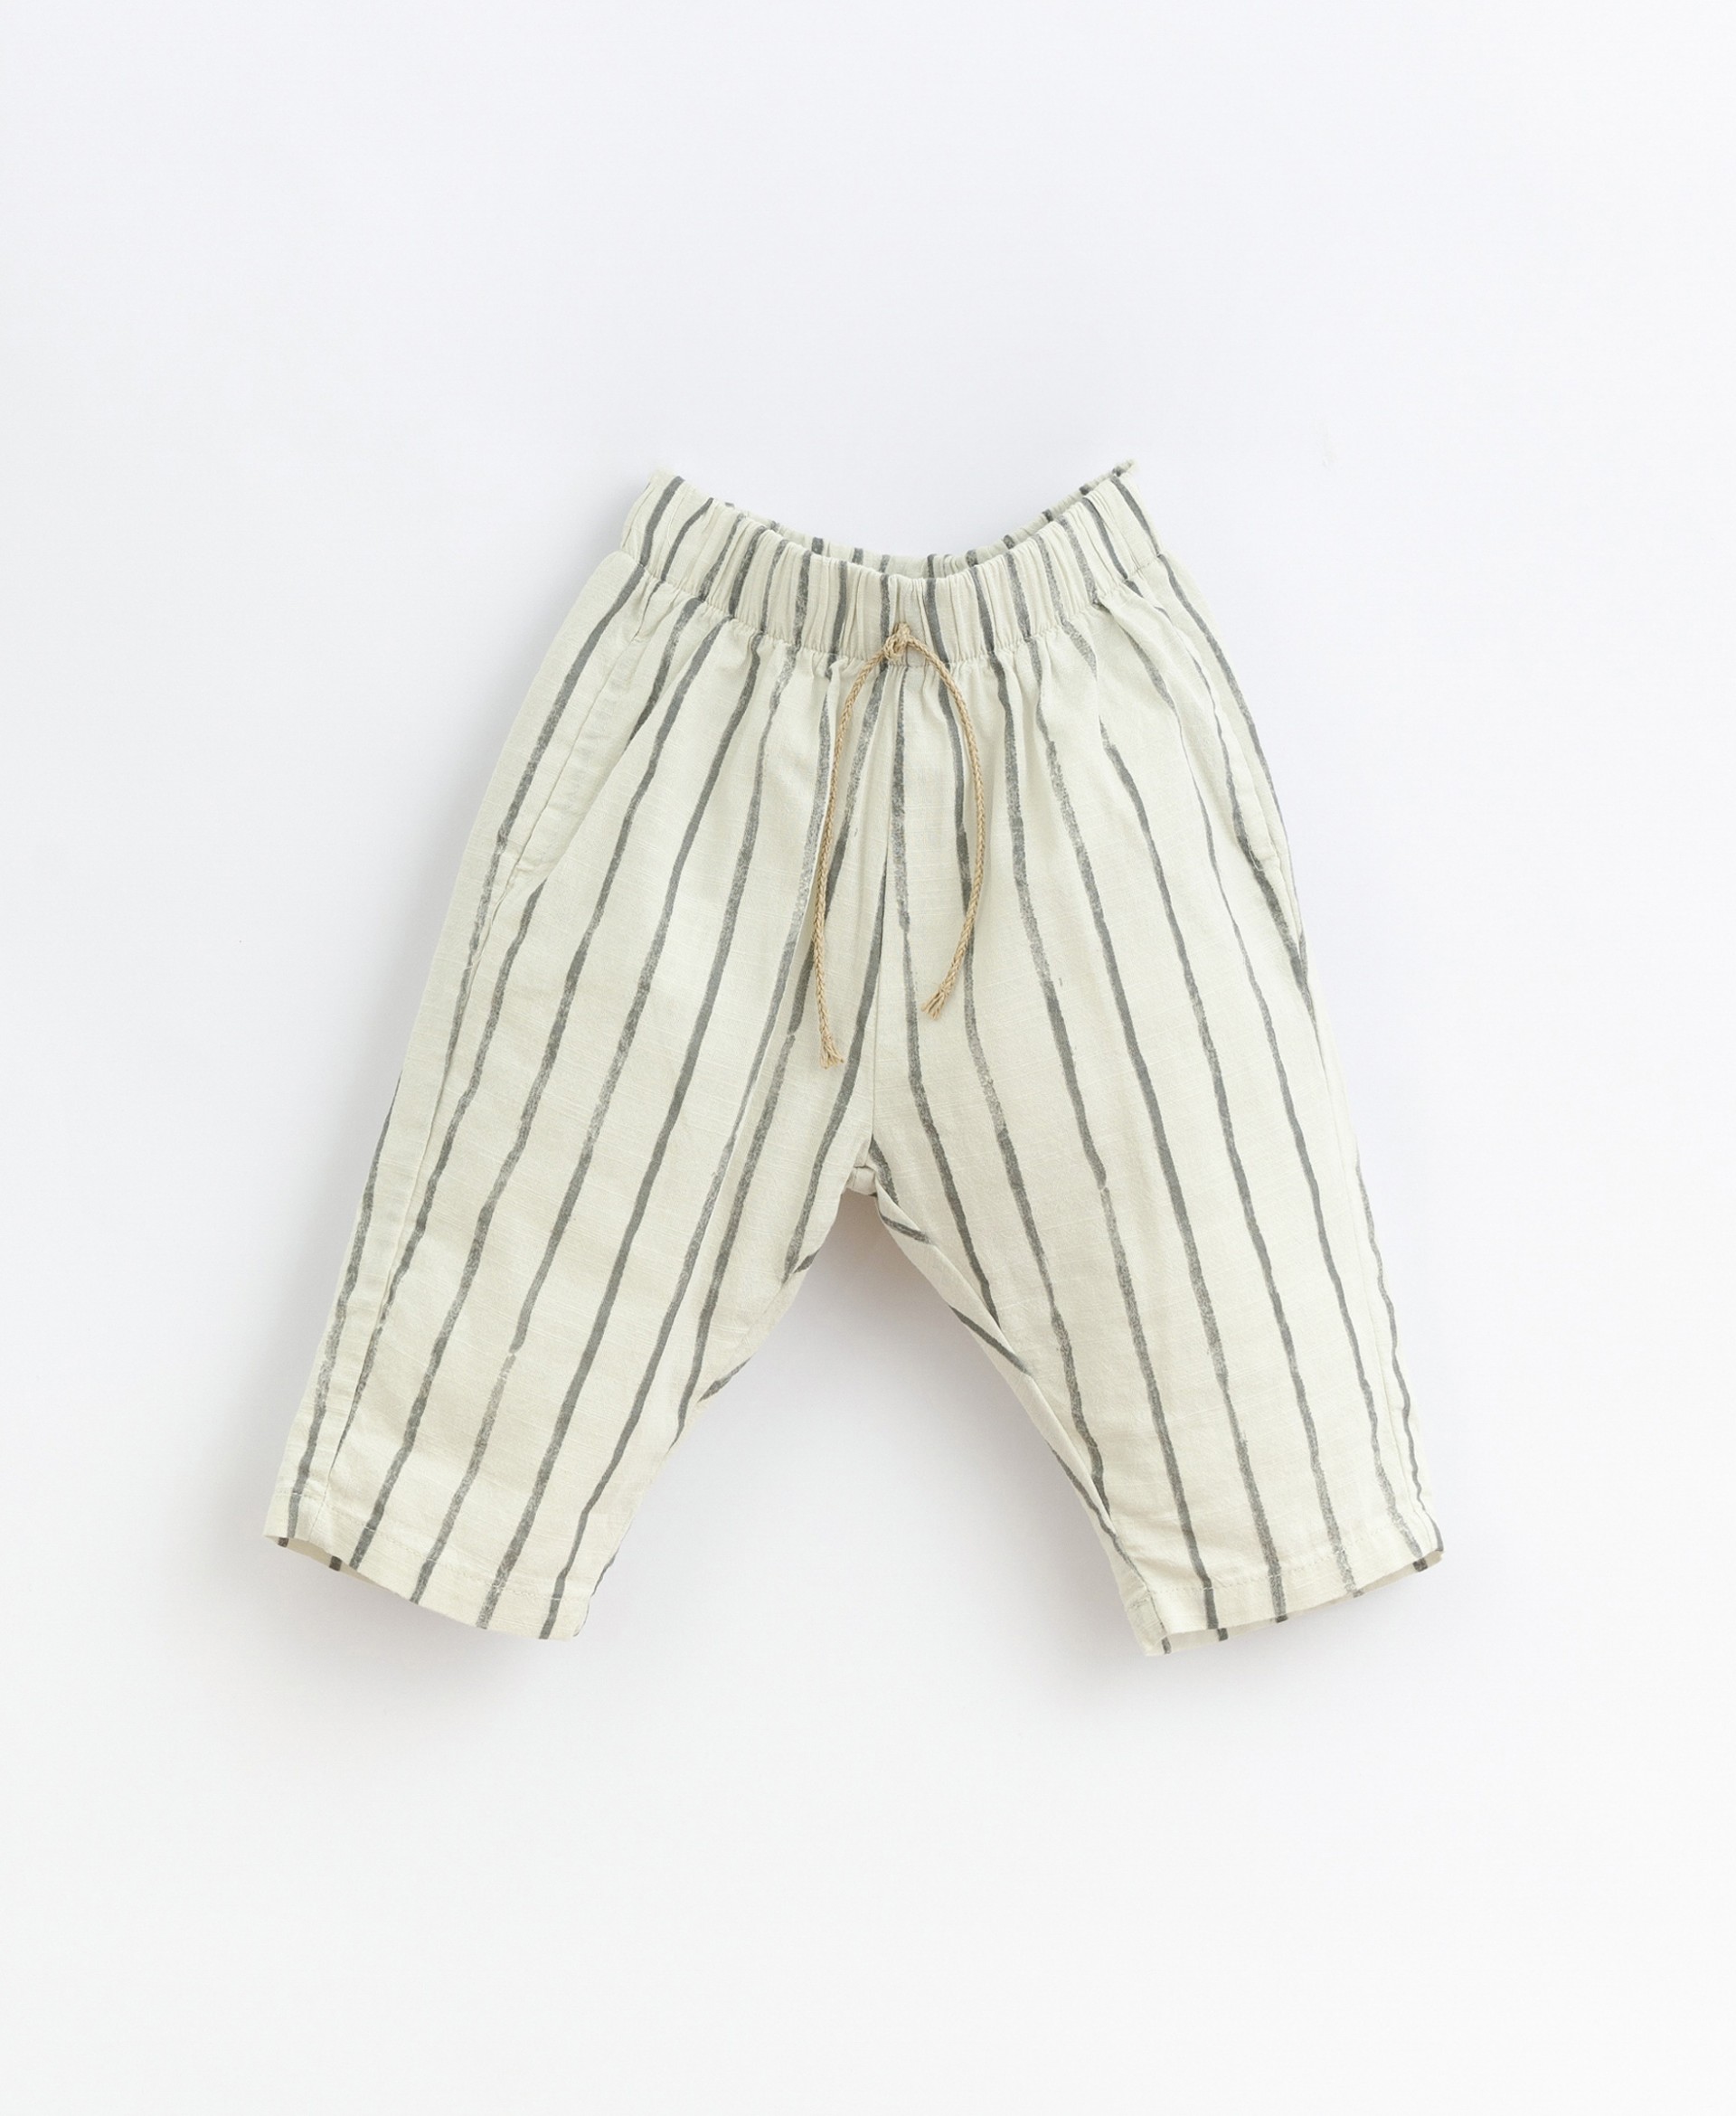 Pants in printed stripe fabric | Basketry